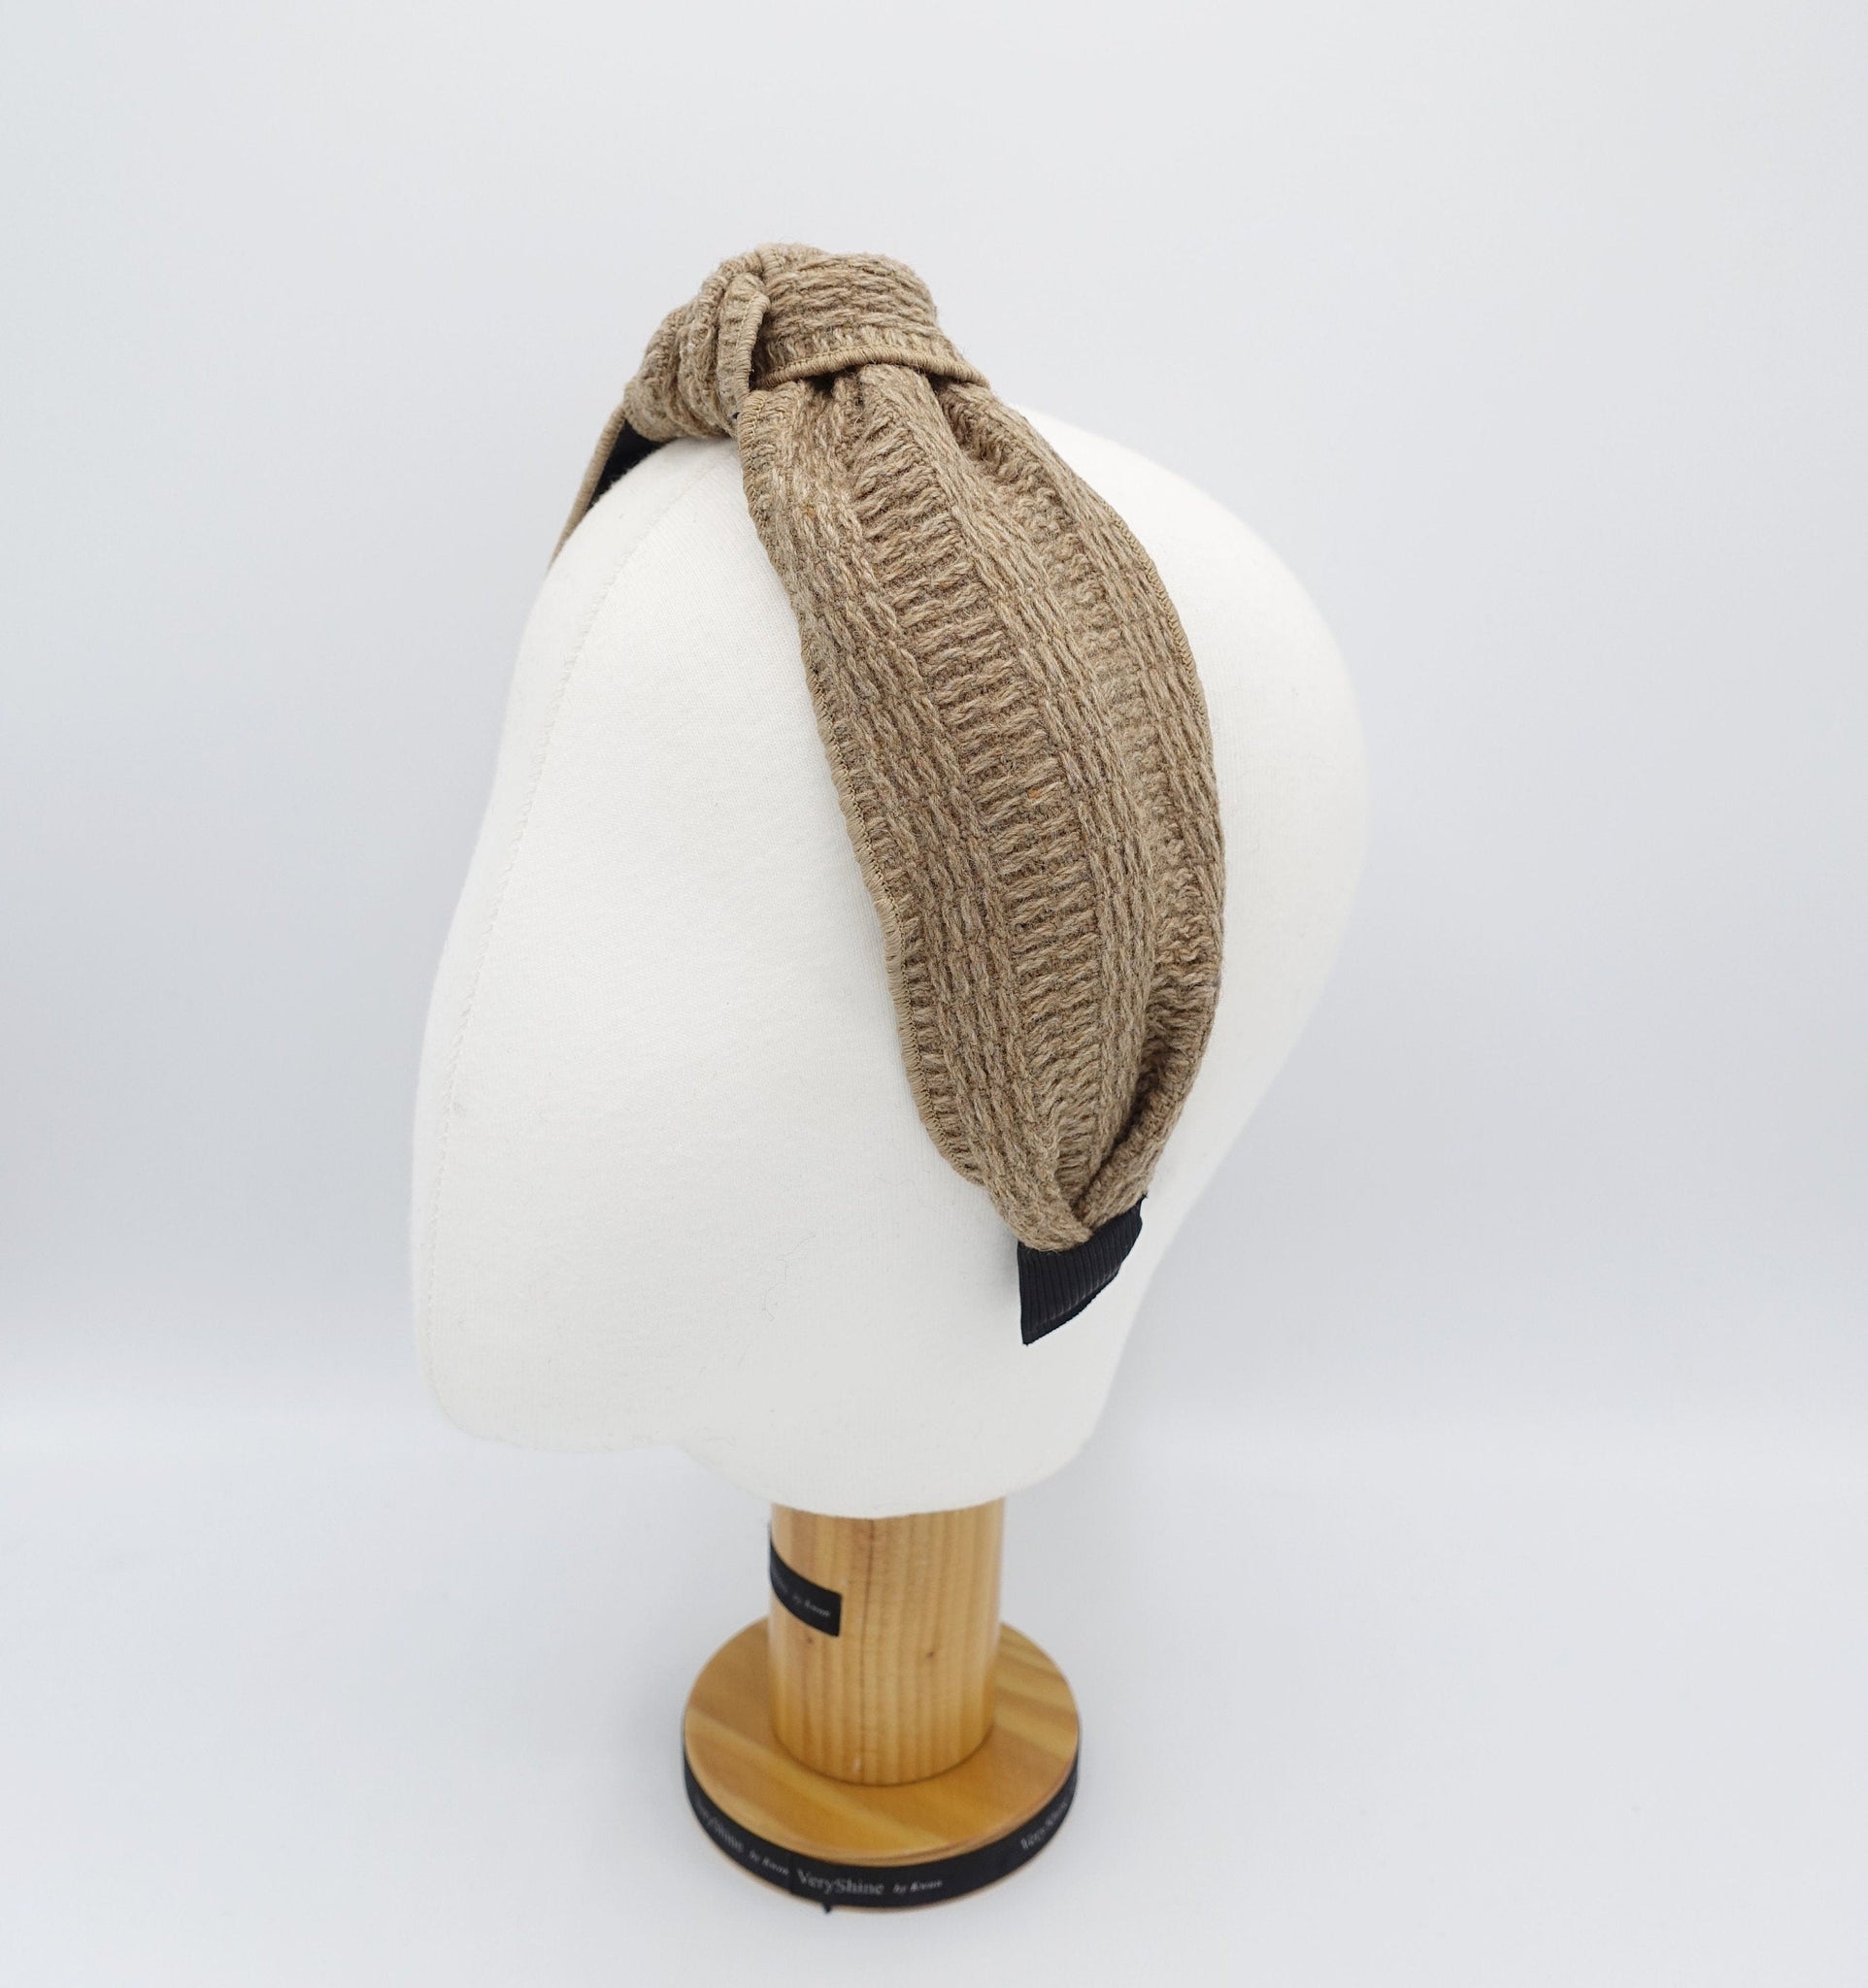 veryshine.com knit top knot headband